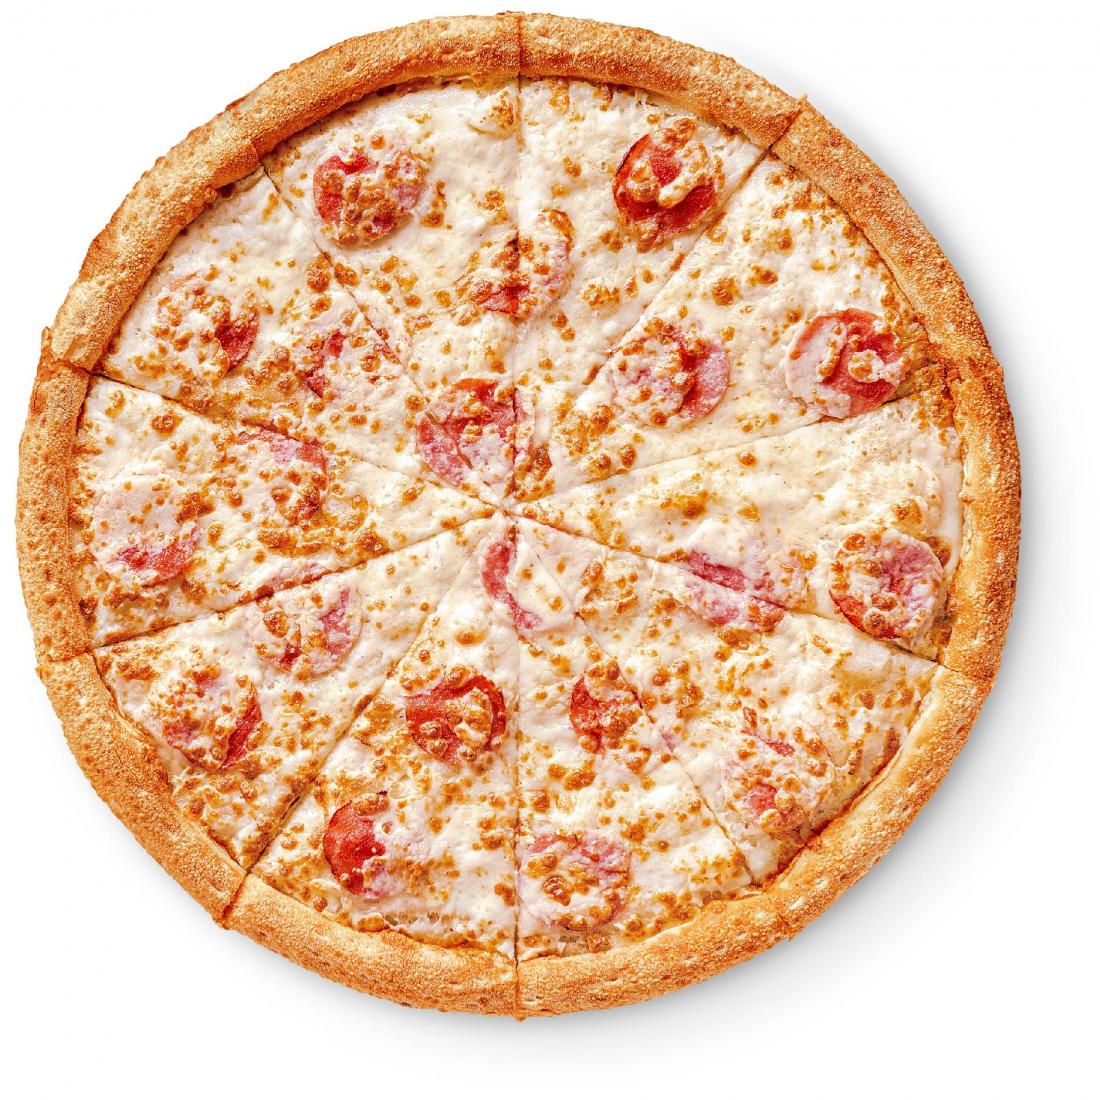 состав пиццы пепперони в додо пицца фото 74